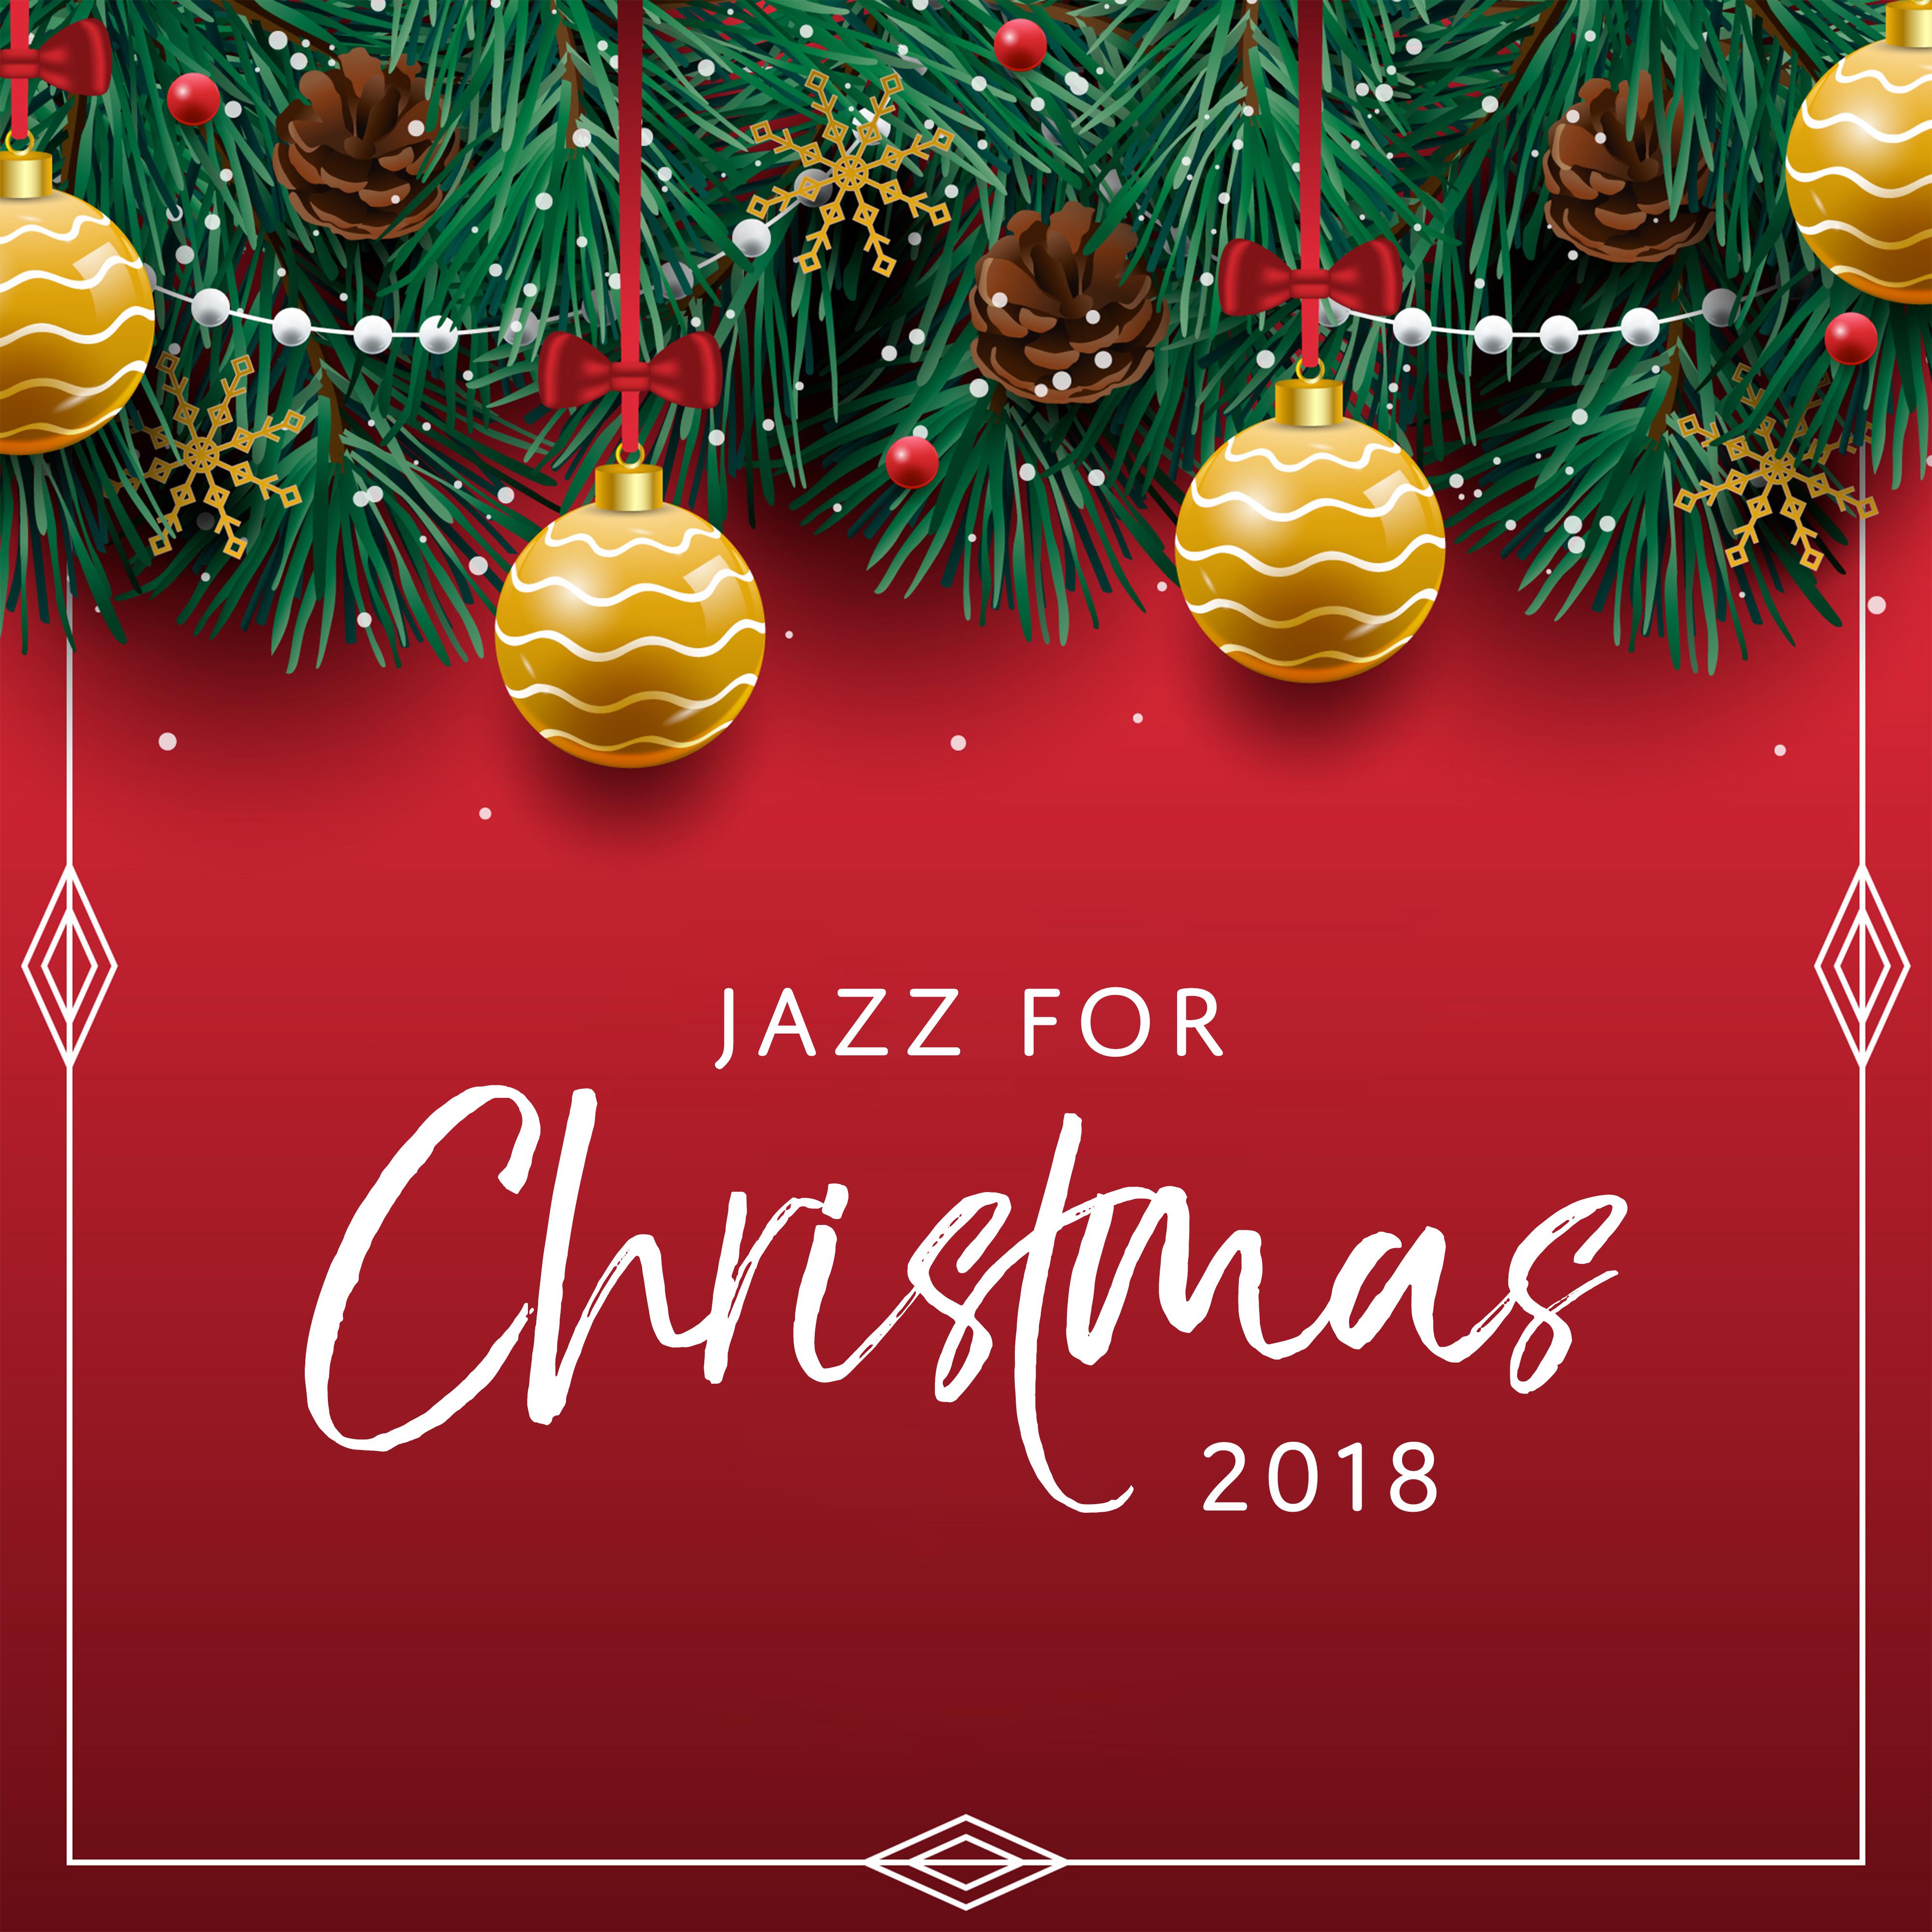 Jazz for Christmas 2018